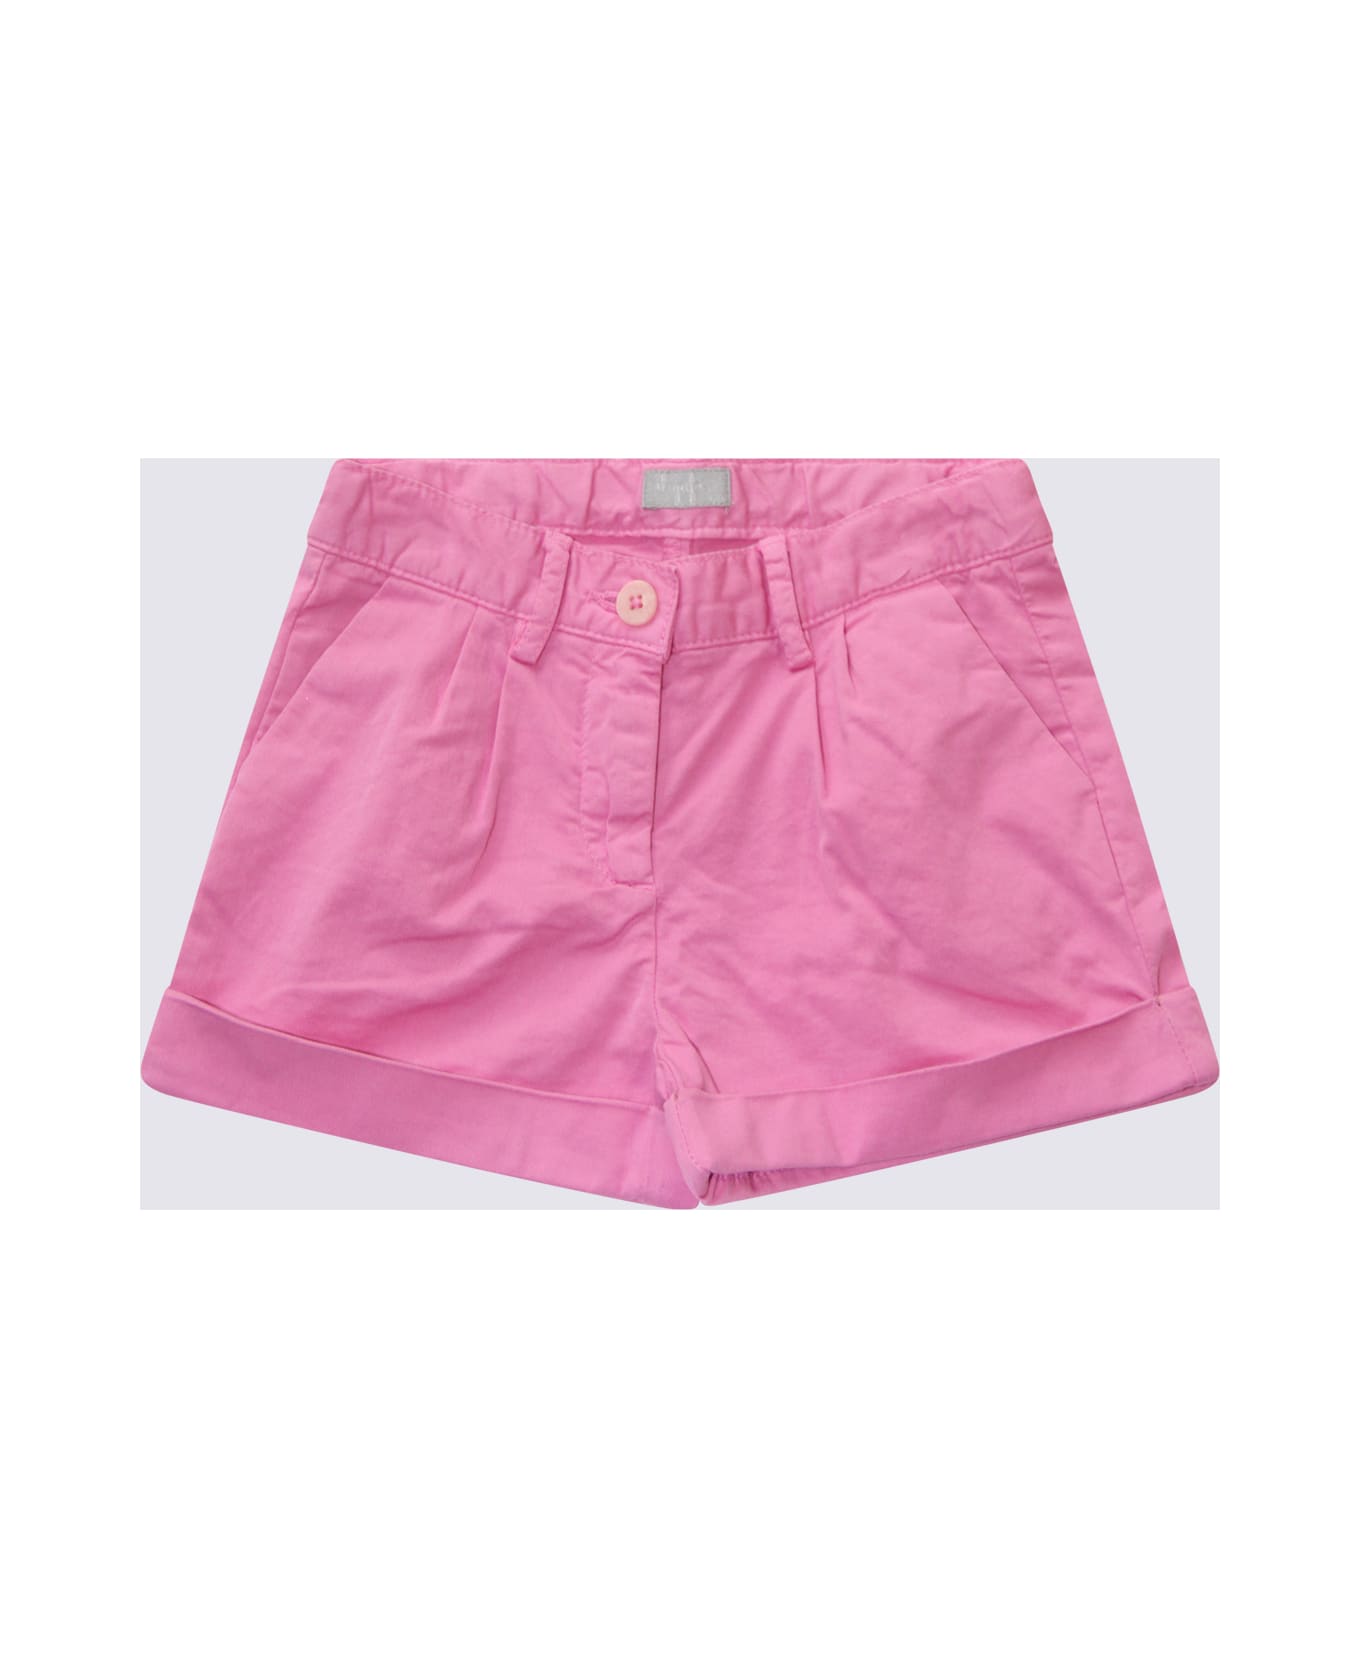 Il Gufo Bright Pink Cotton Shorts - ROSA CANINA ボトムス